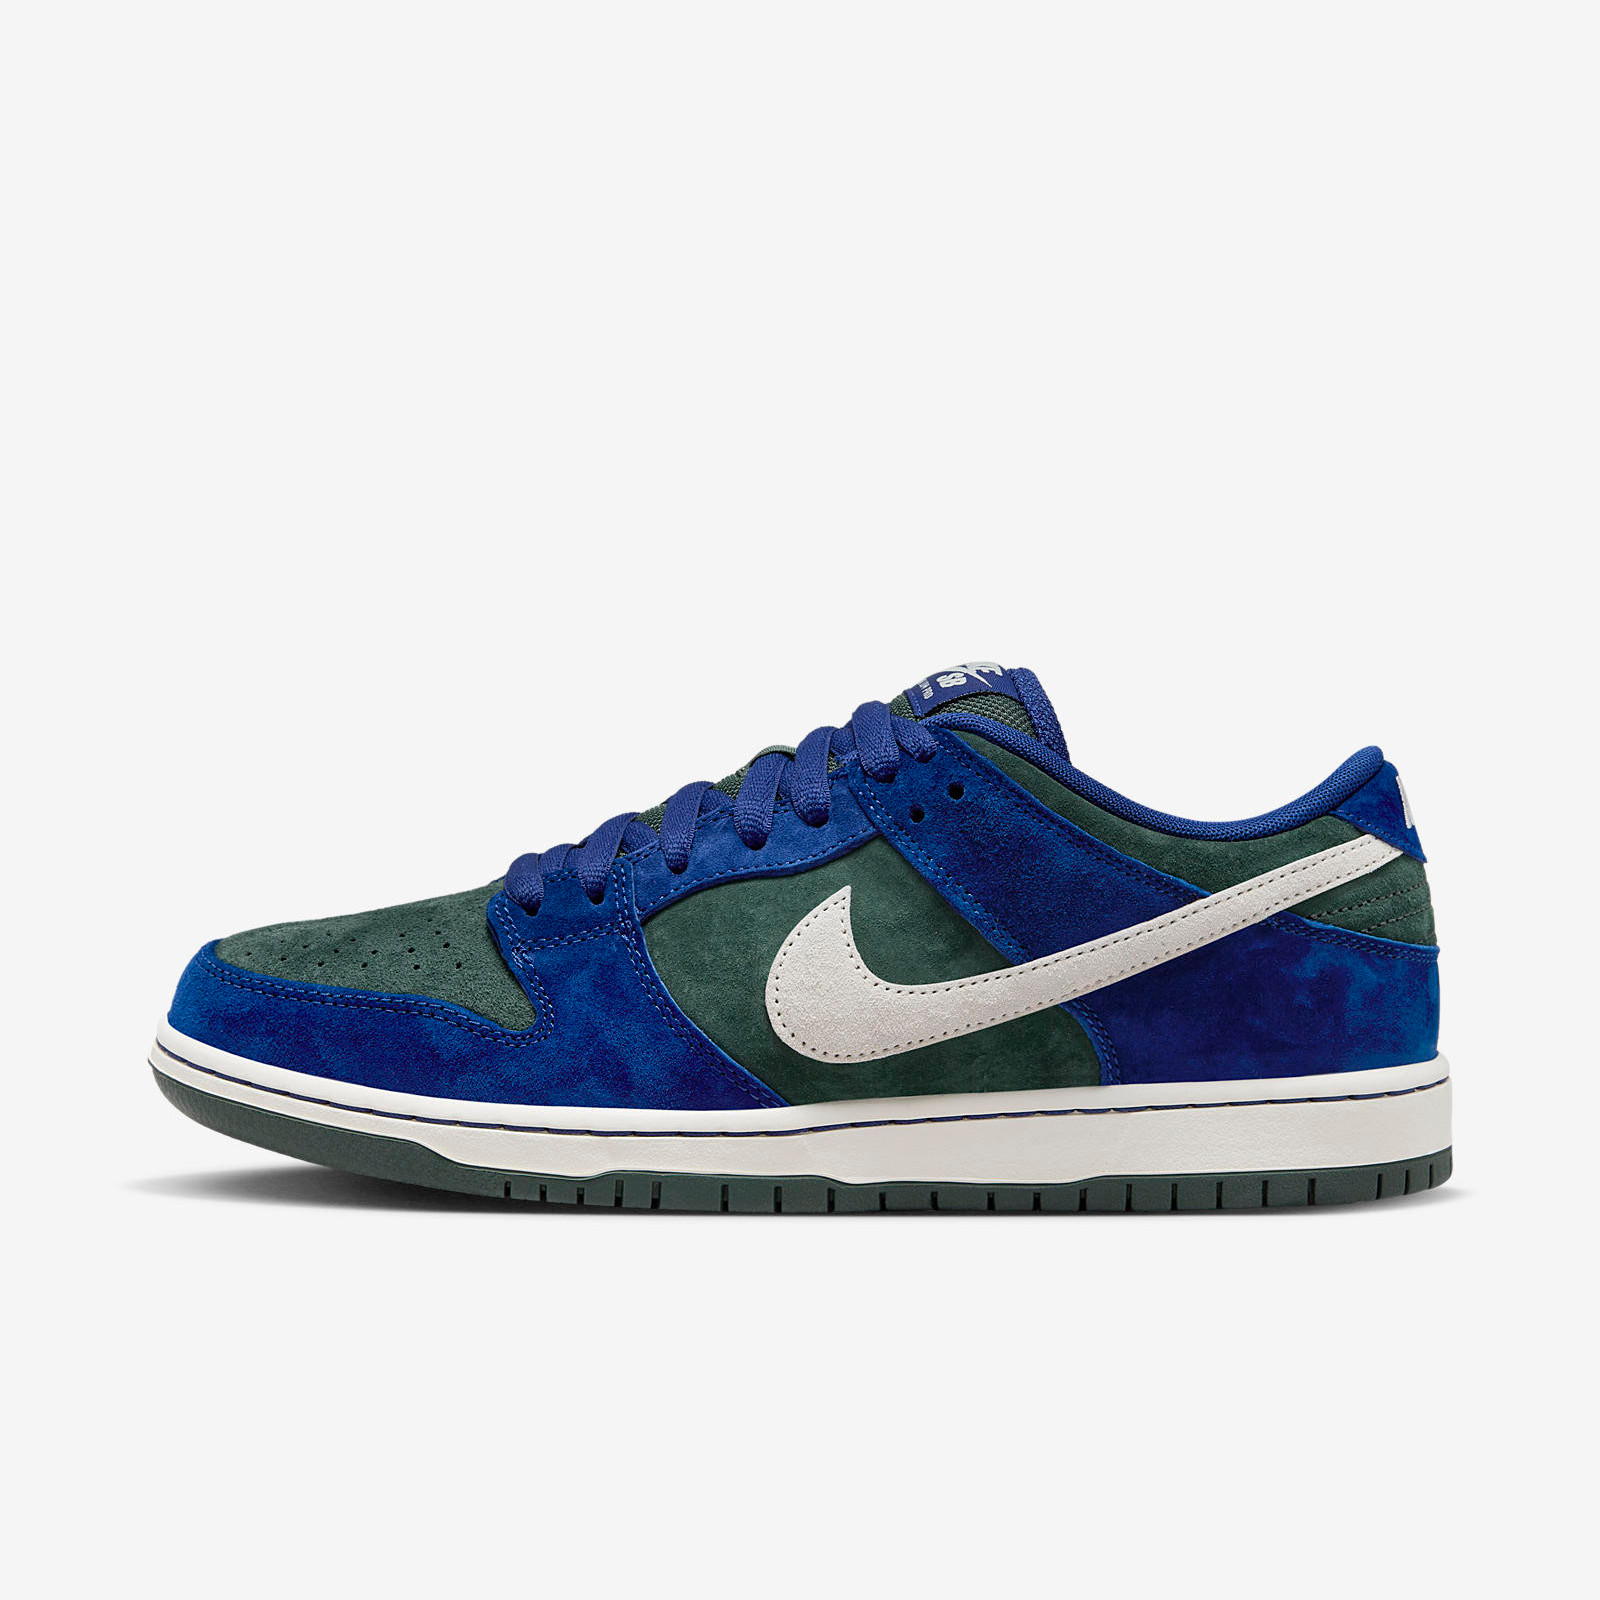 Nike SB Dunk Low Pro
Blue / Green